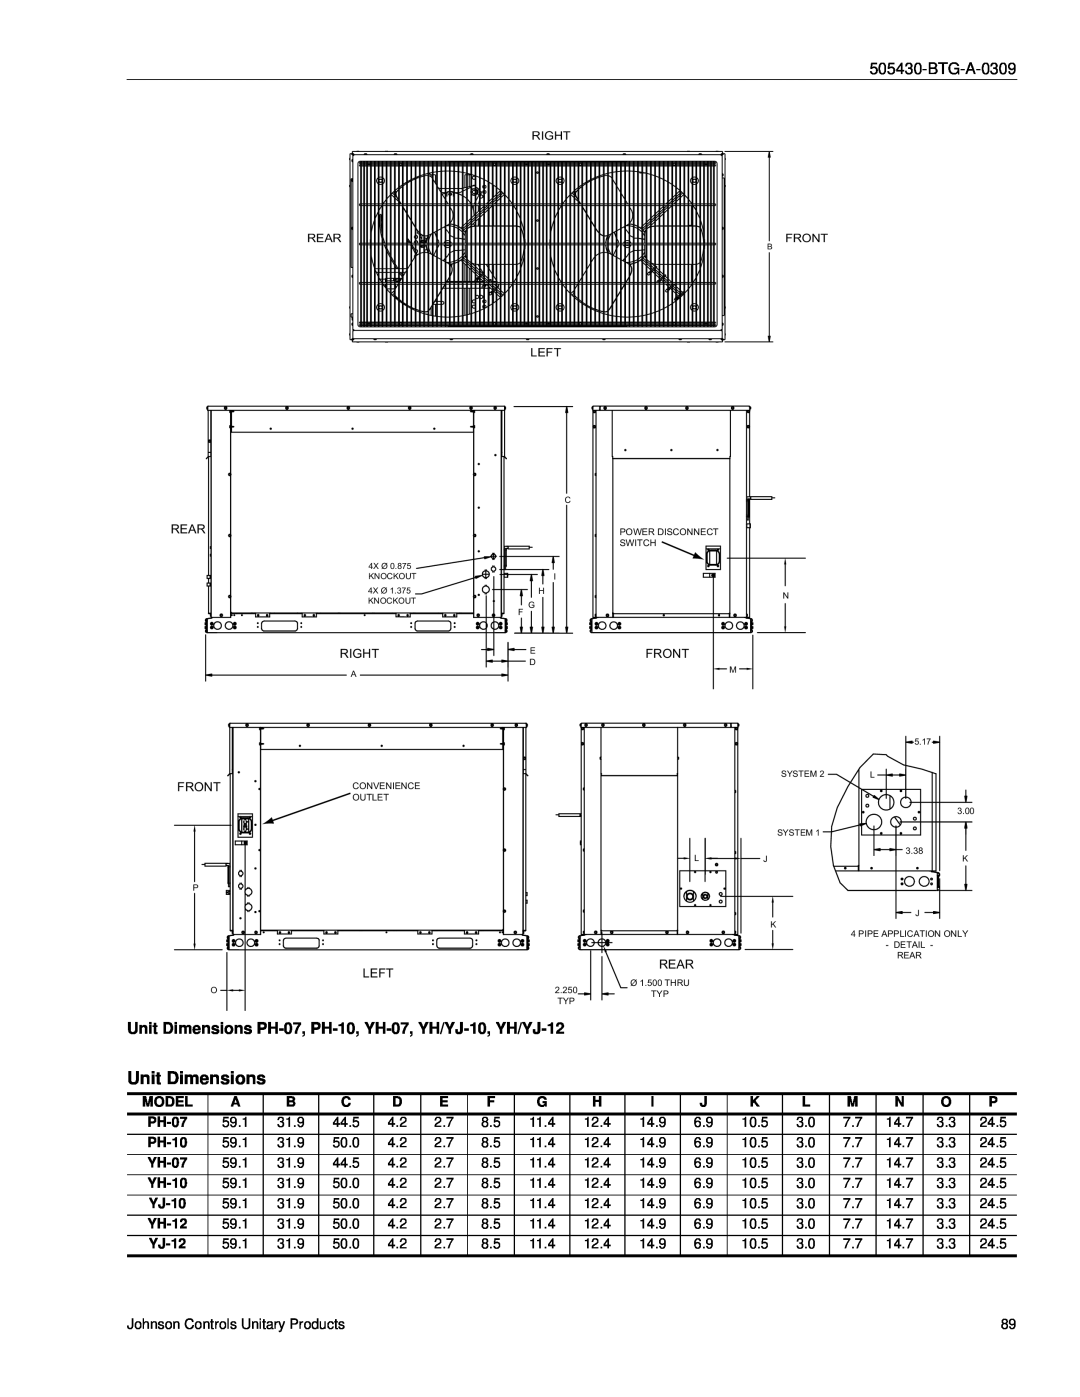 Johnson Controls R-410A manual Unit Dimensions 